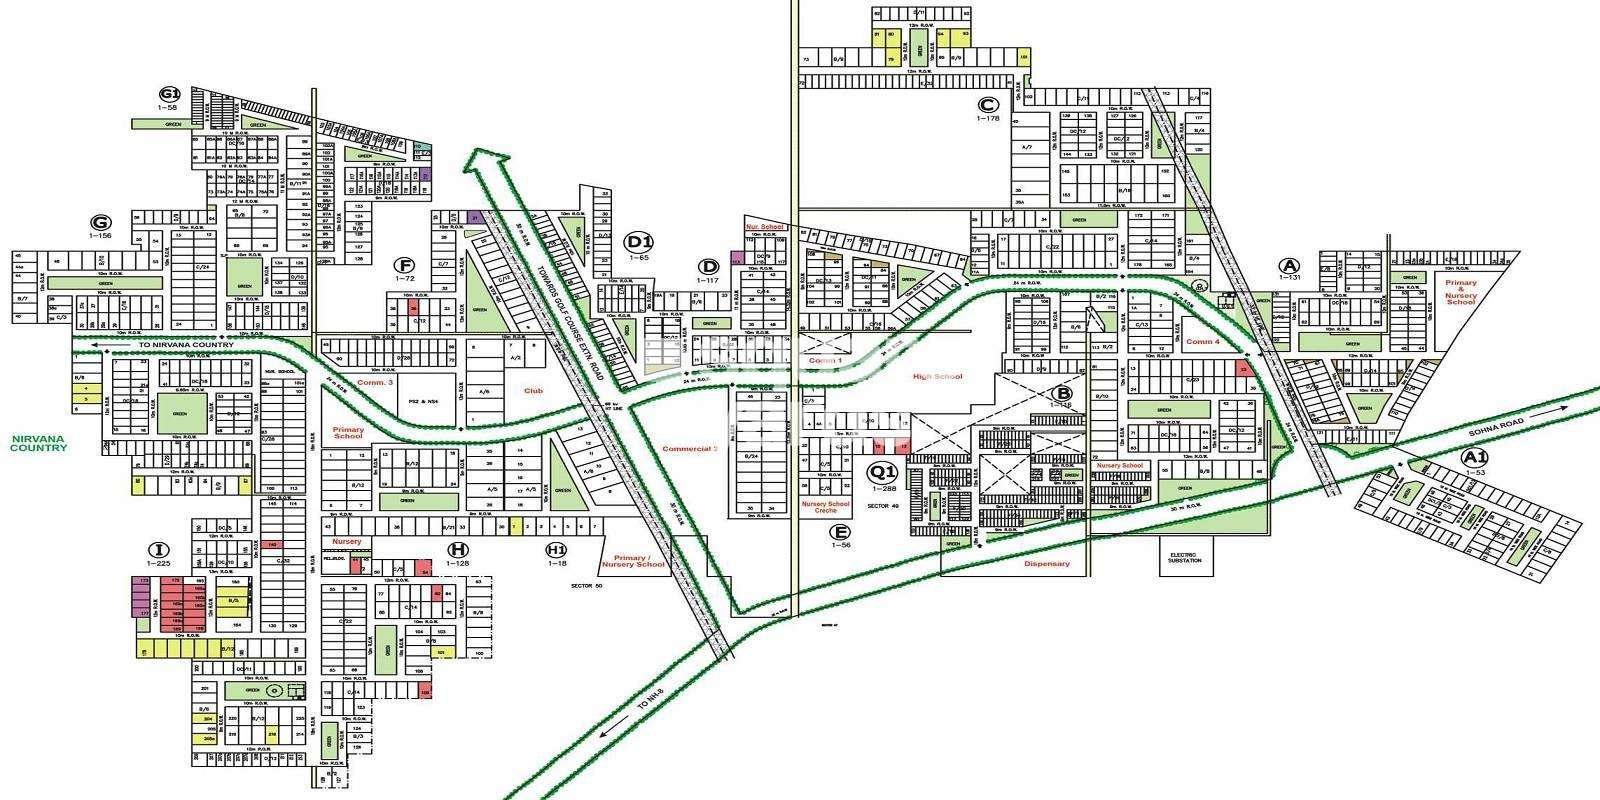 unitech south city ii project master plan image1